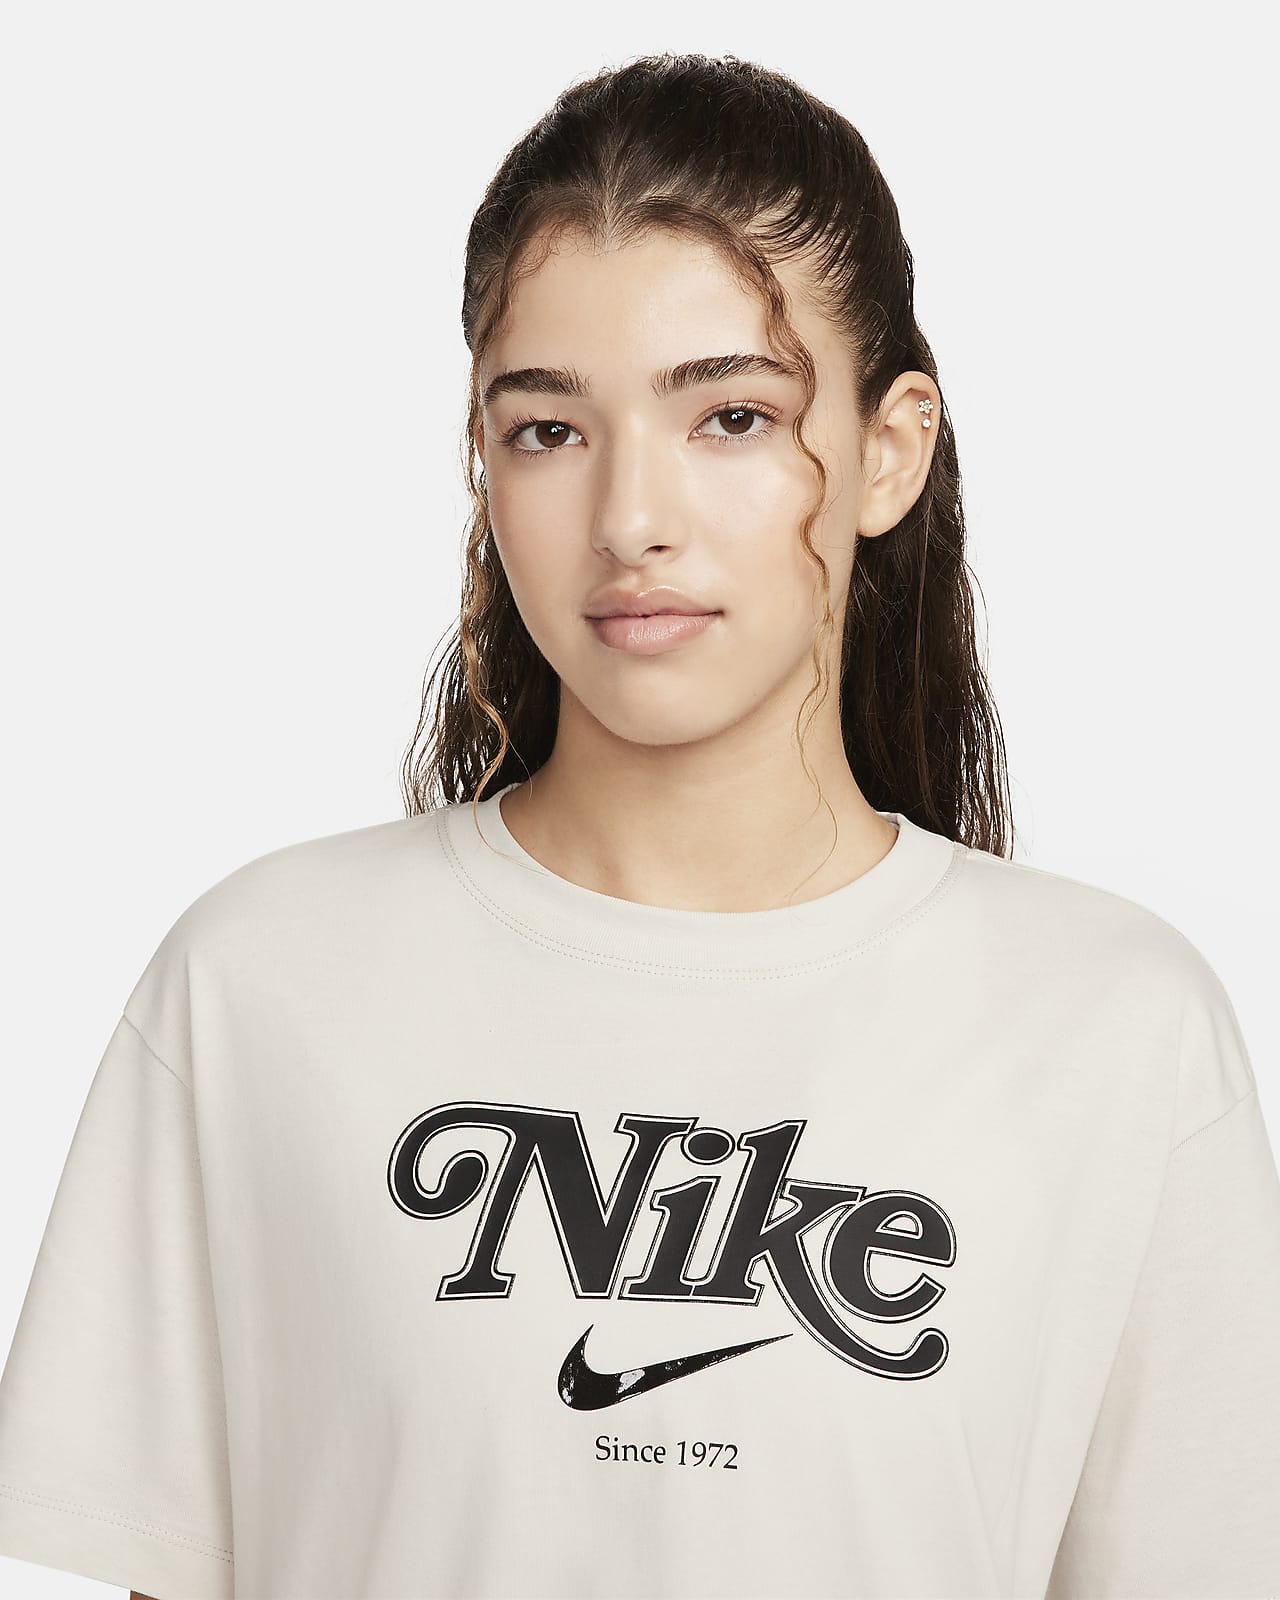 Nike, Tops, Nike Women Sportswear Cotton Heritage Tshirt Size Medium  Black